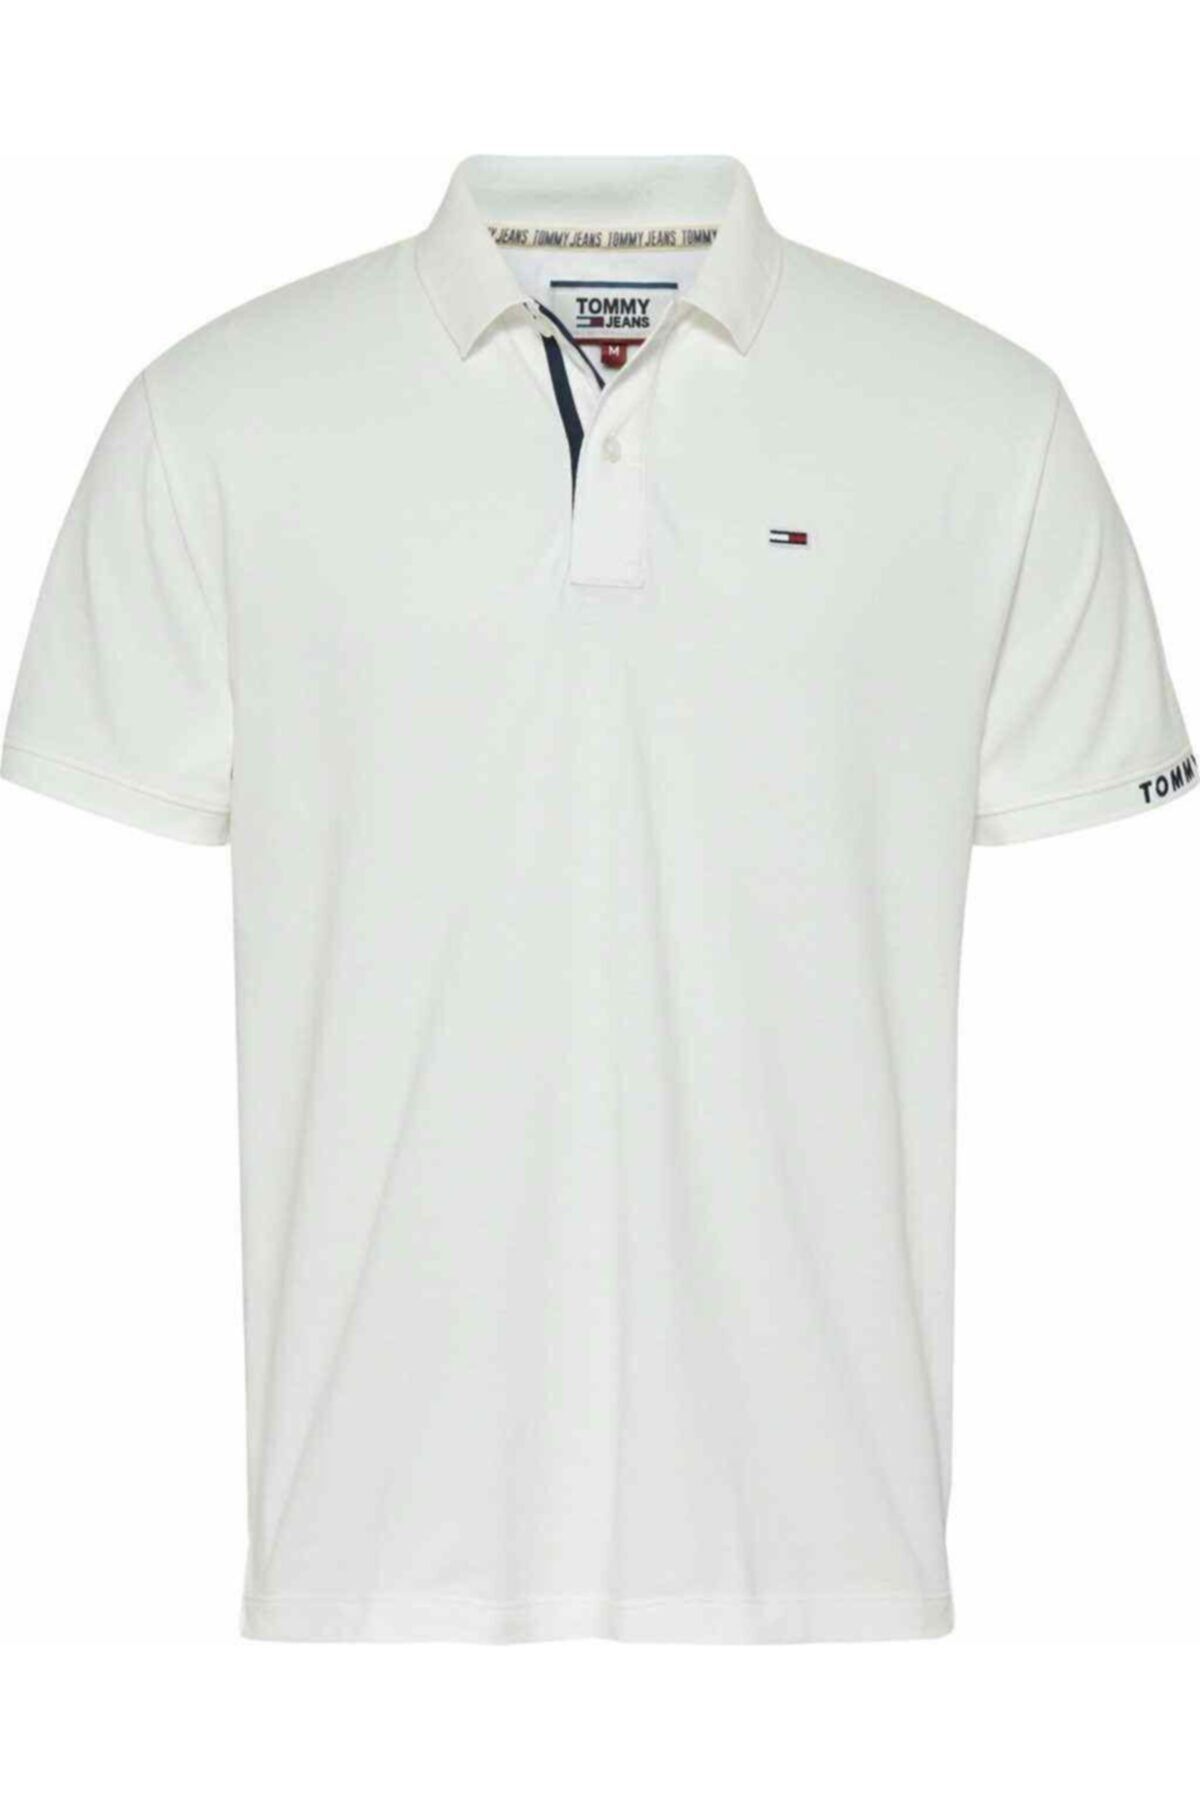 Tommy Hilfiger Erkek Beyaz Polo Yaka T-shirt Tjm Branded Rıb Polo DM0DM07802